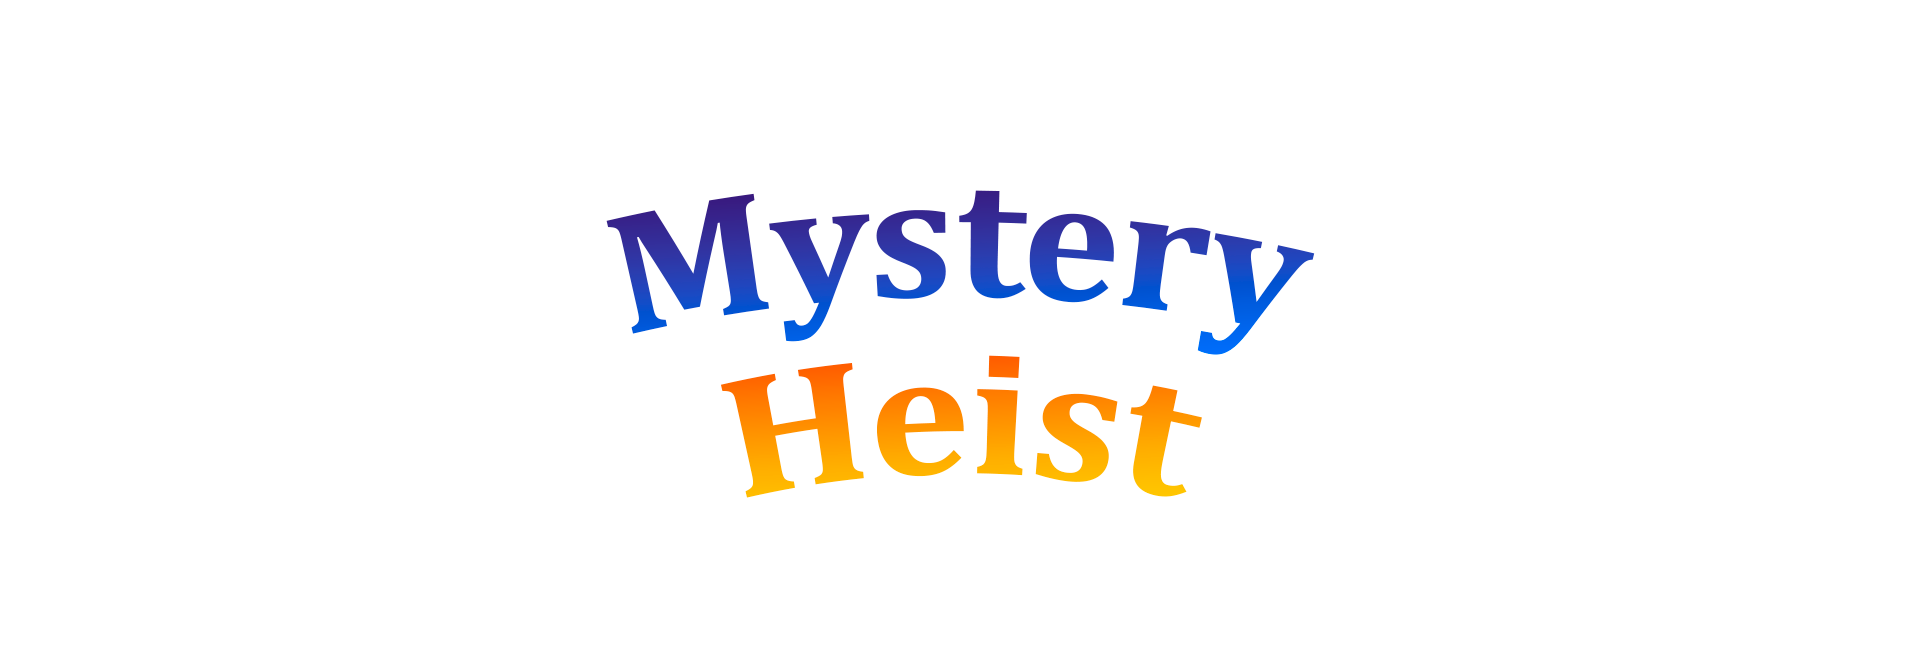 Mystery Heist